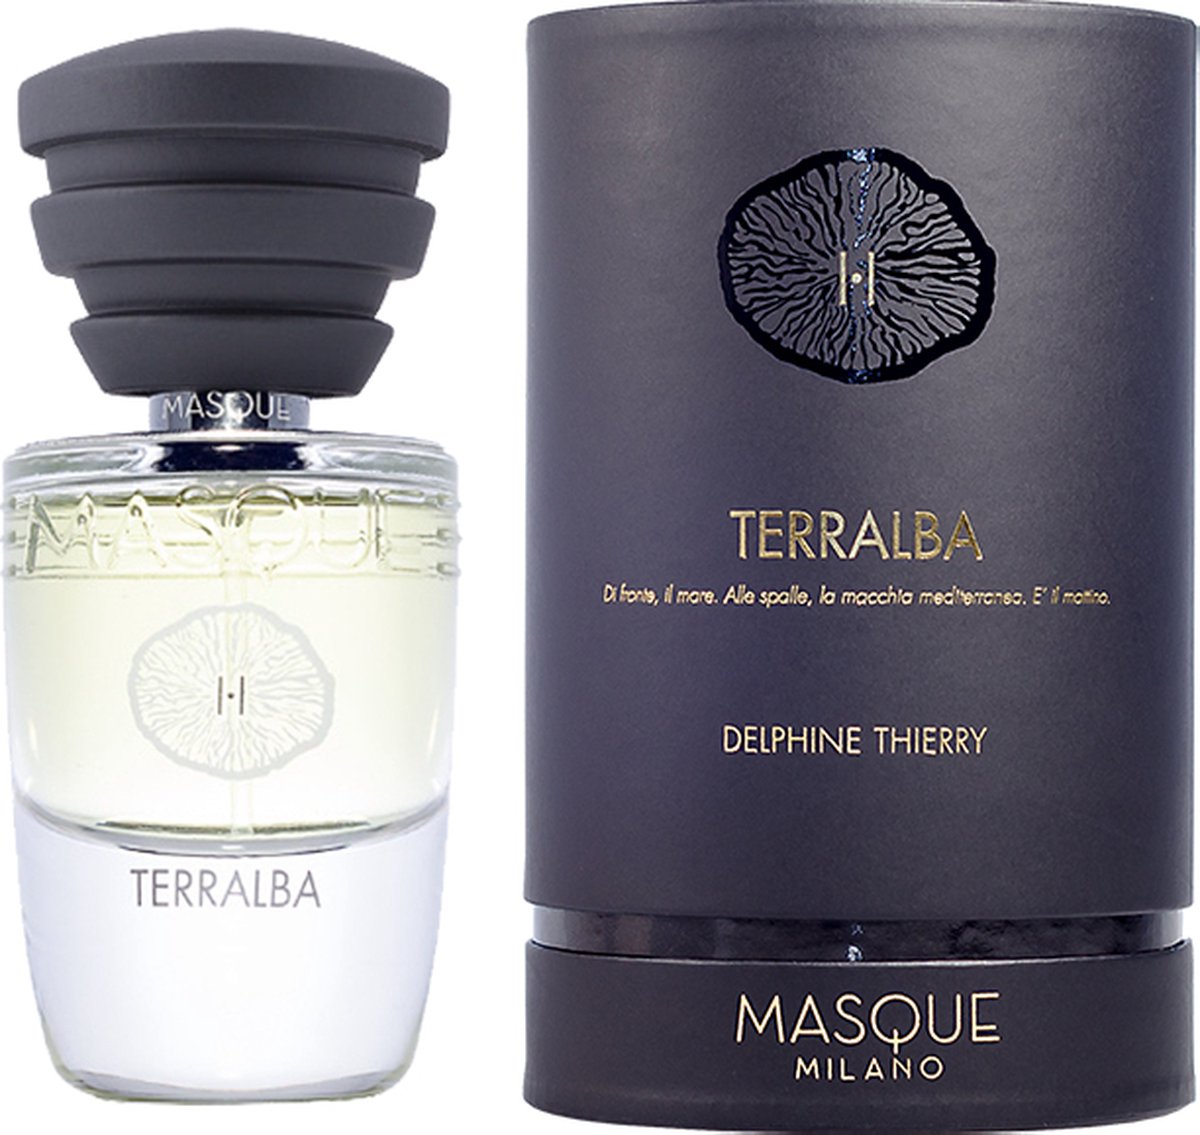 Terralba by Masque Milano 35 ml - Eau De Parfum Spray (Unisex)